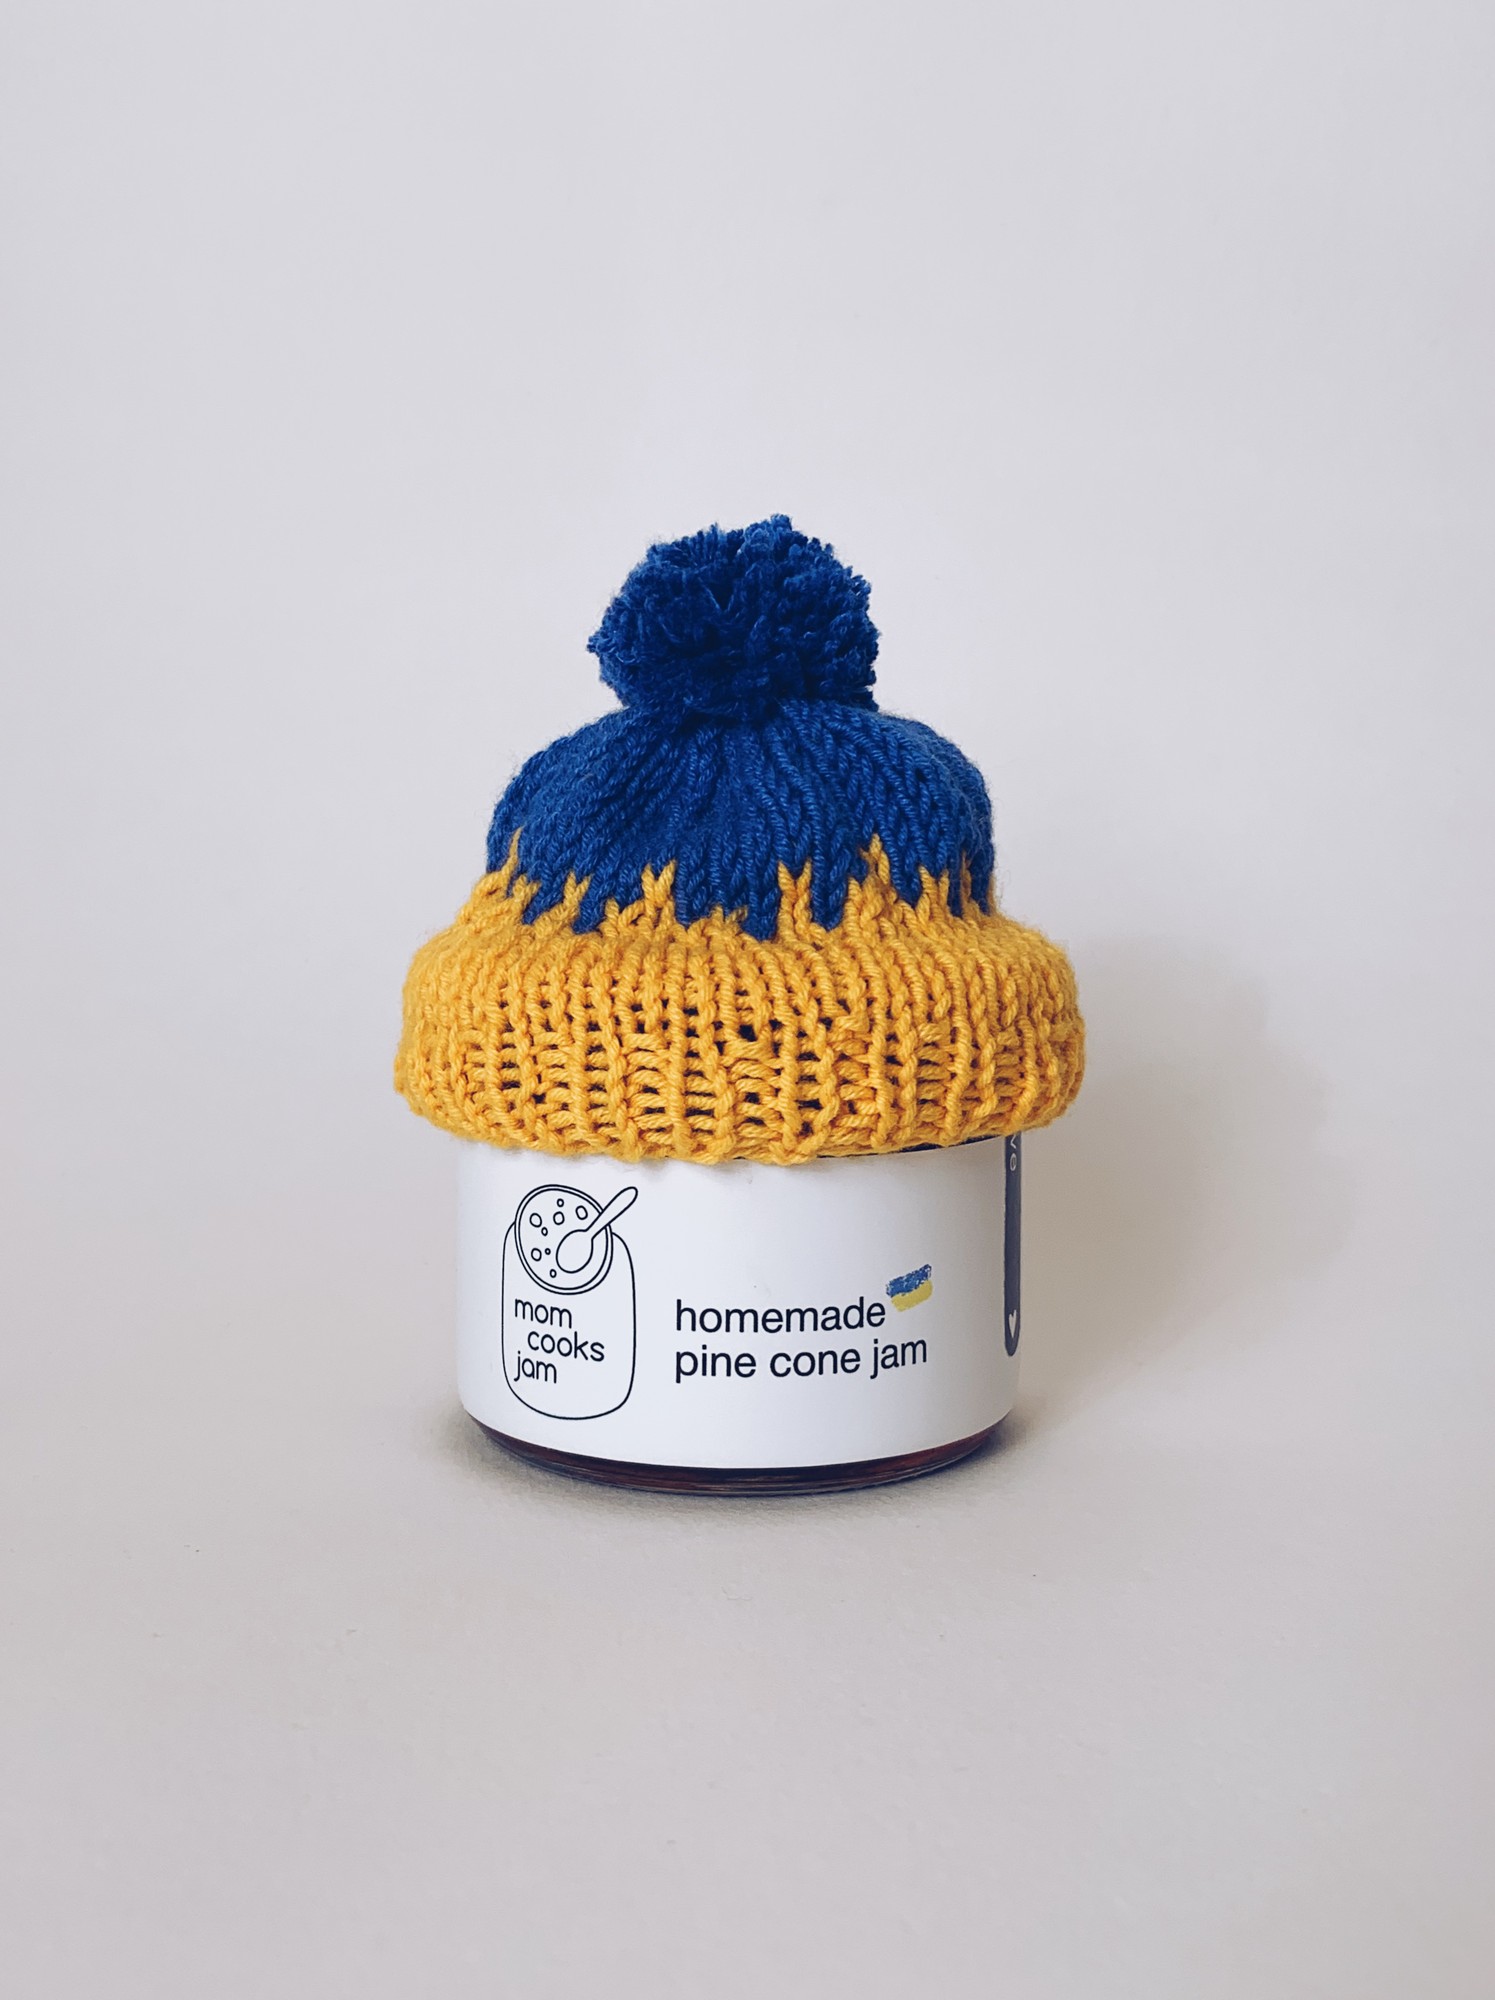 Gift Pine cone jam jar with Ukrainian symbols hat from Ukraine sellers